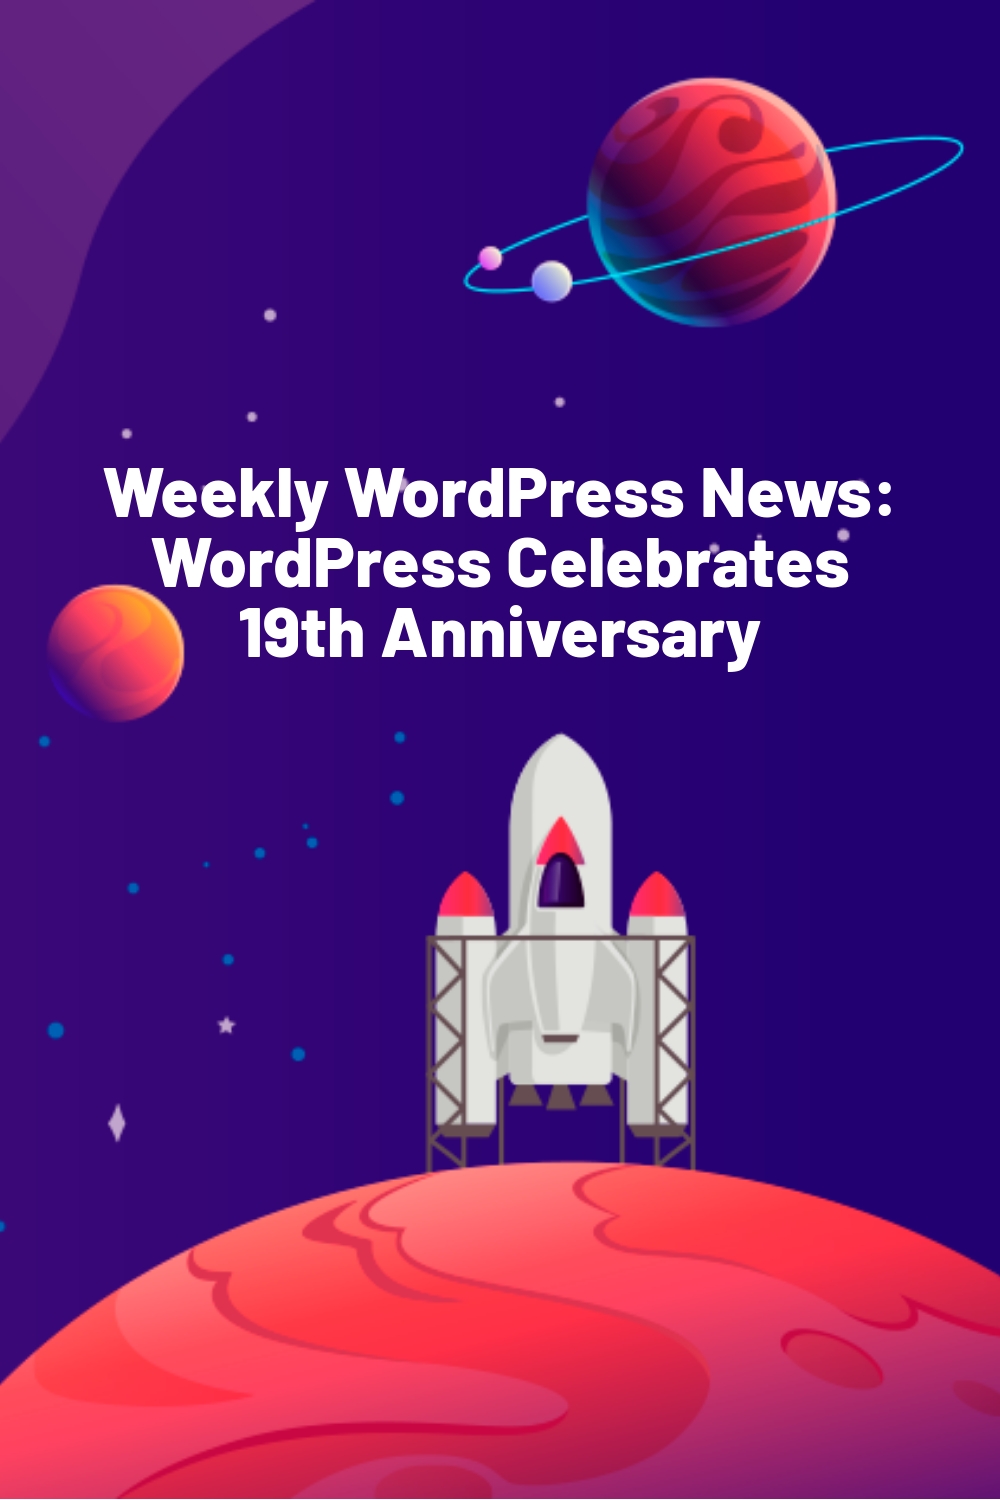 Weekly WordPress News: WordPress Celebrates 19th Anniversary